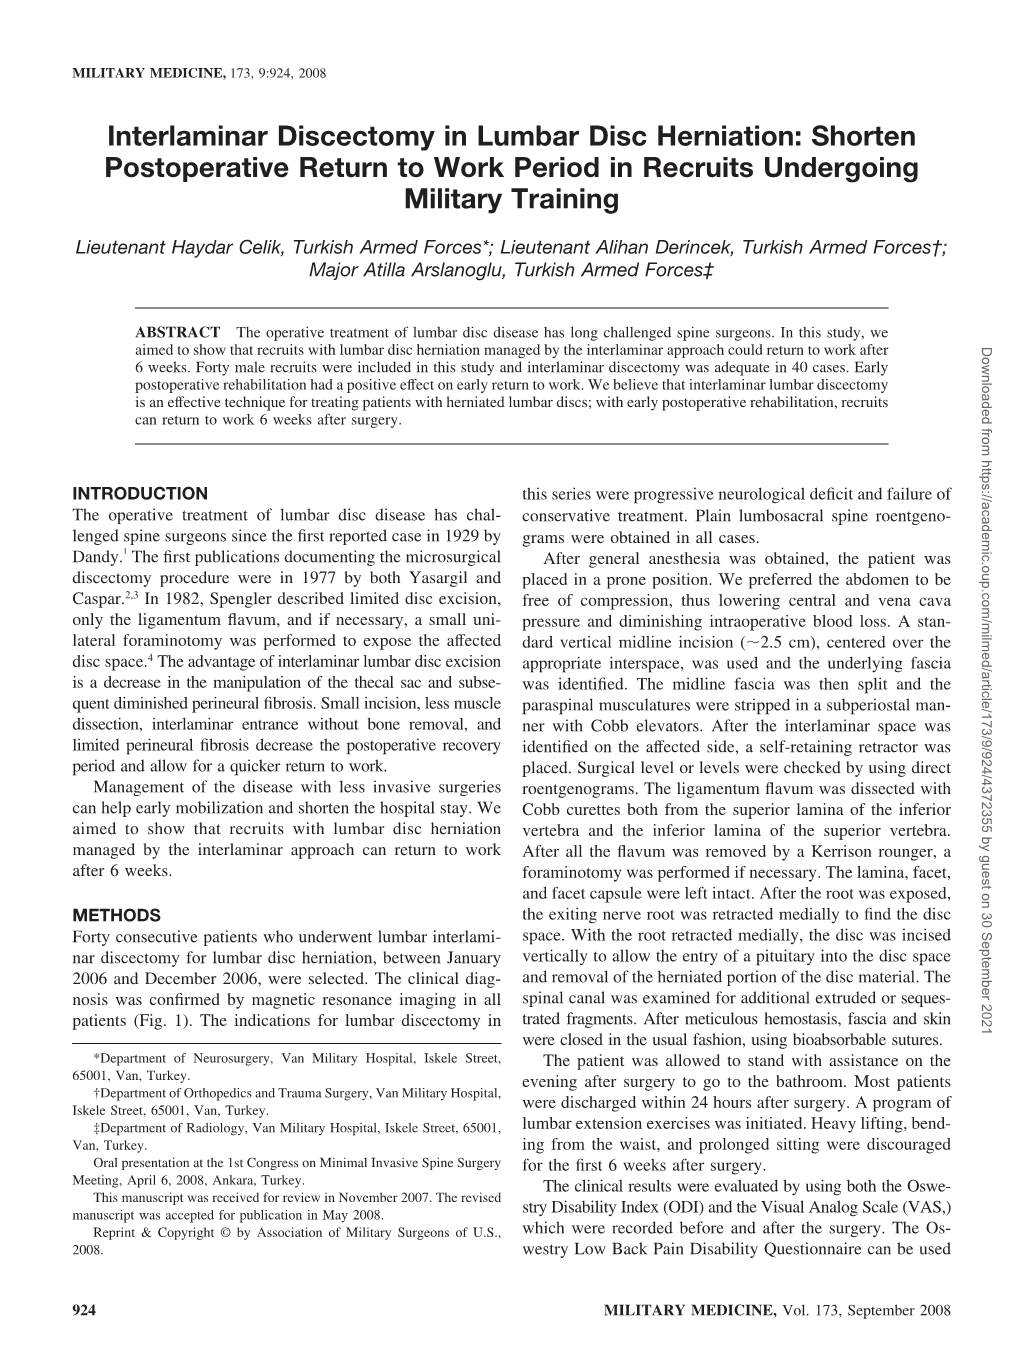 Interlaminar Discectomy in Lumbar Disc Herniation: Shorten Postoperative Return to Work Period in Recruits Undergoing Military Training